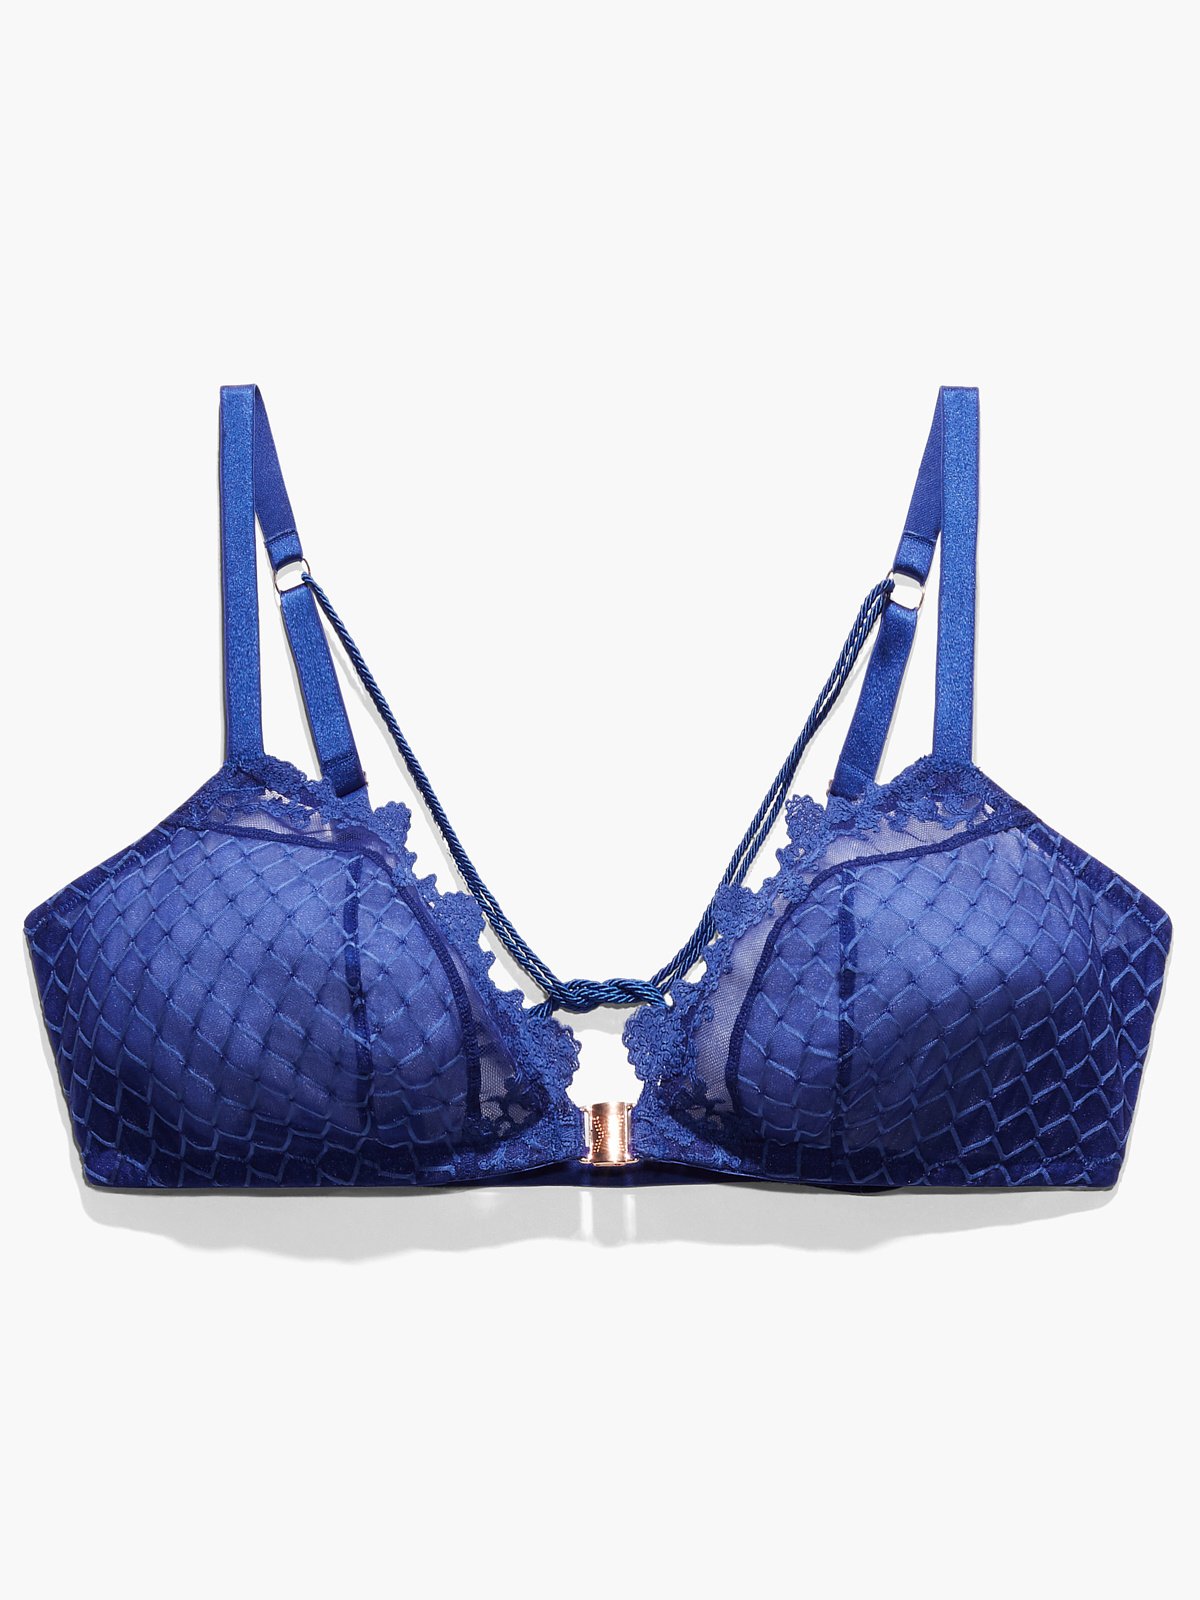 Blue Brocade Bra Belt Set 34B - Magical Fashions